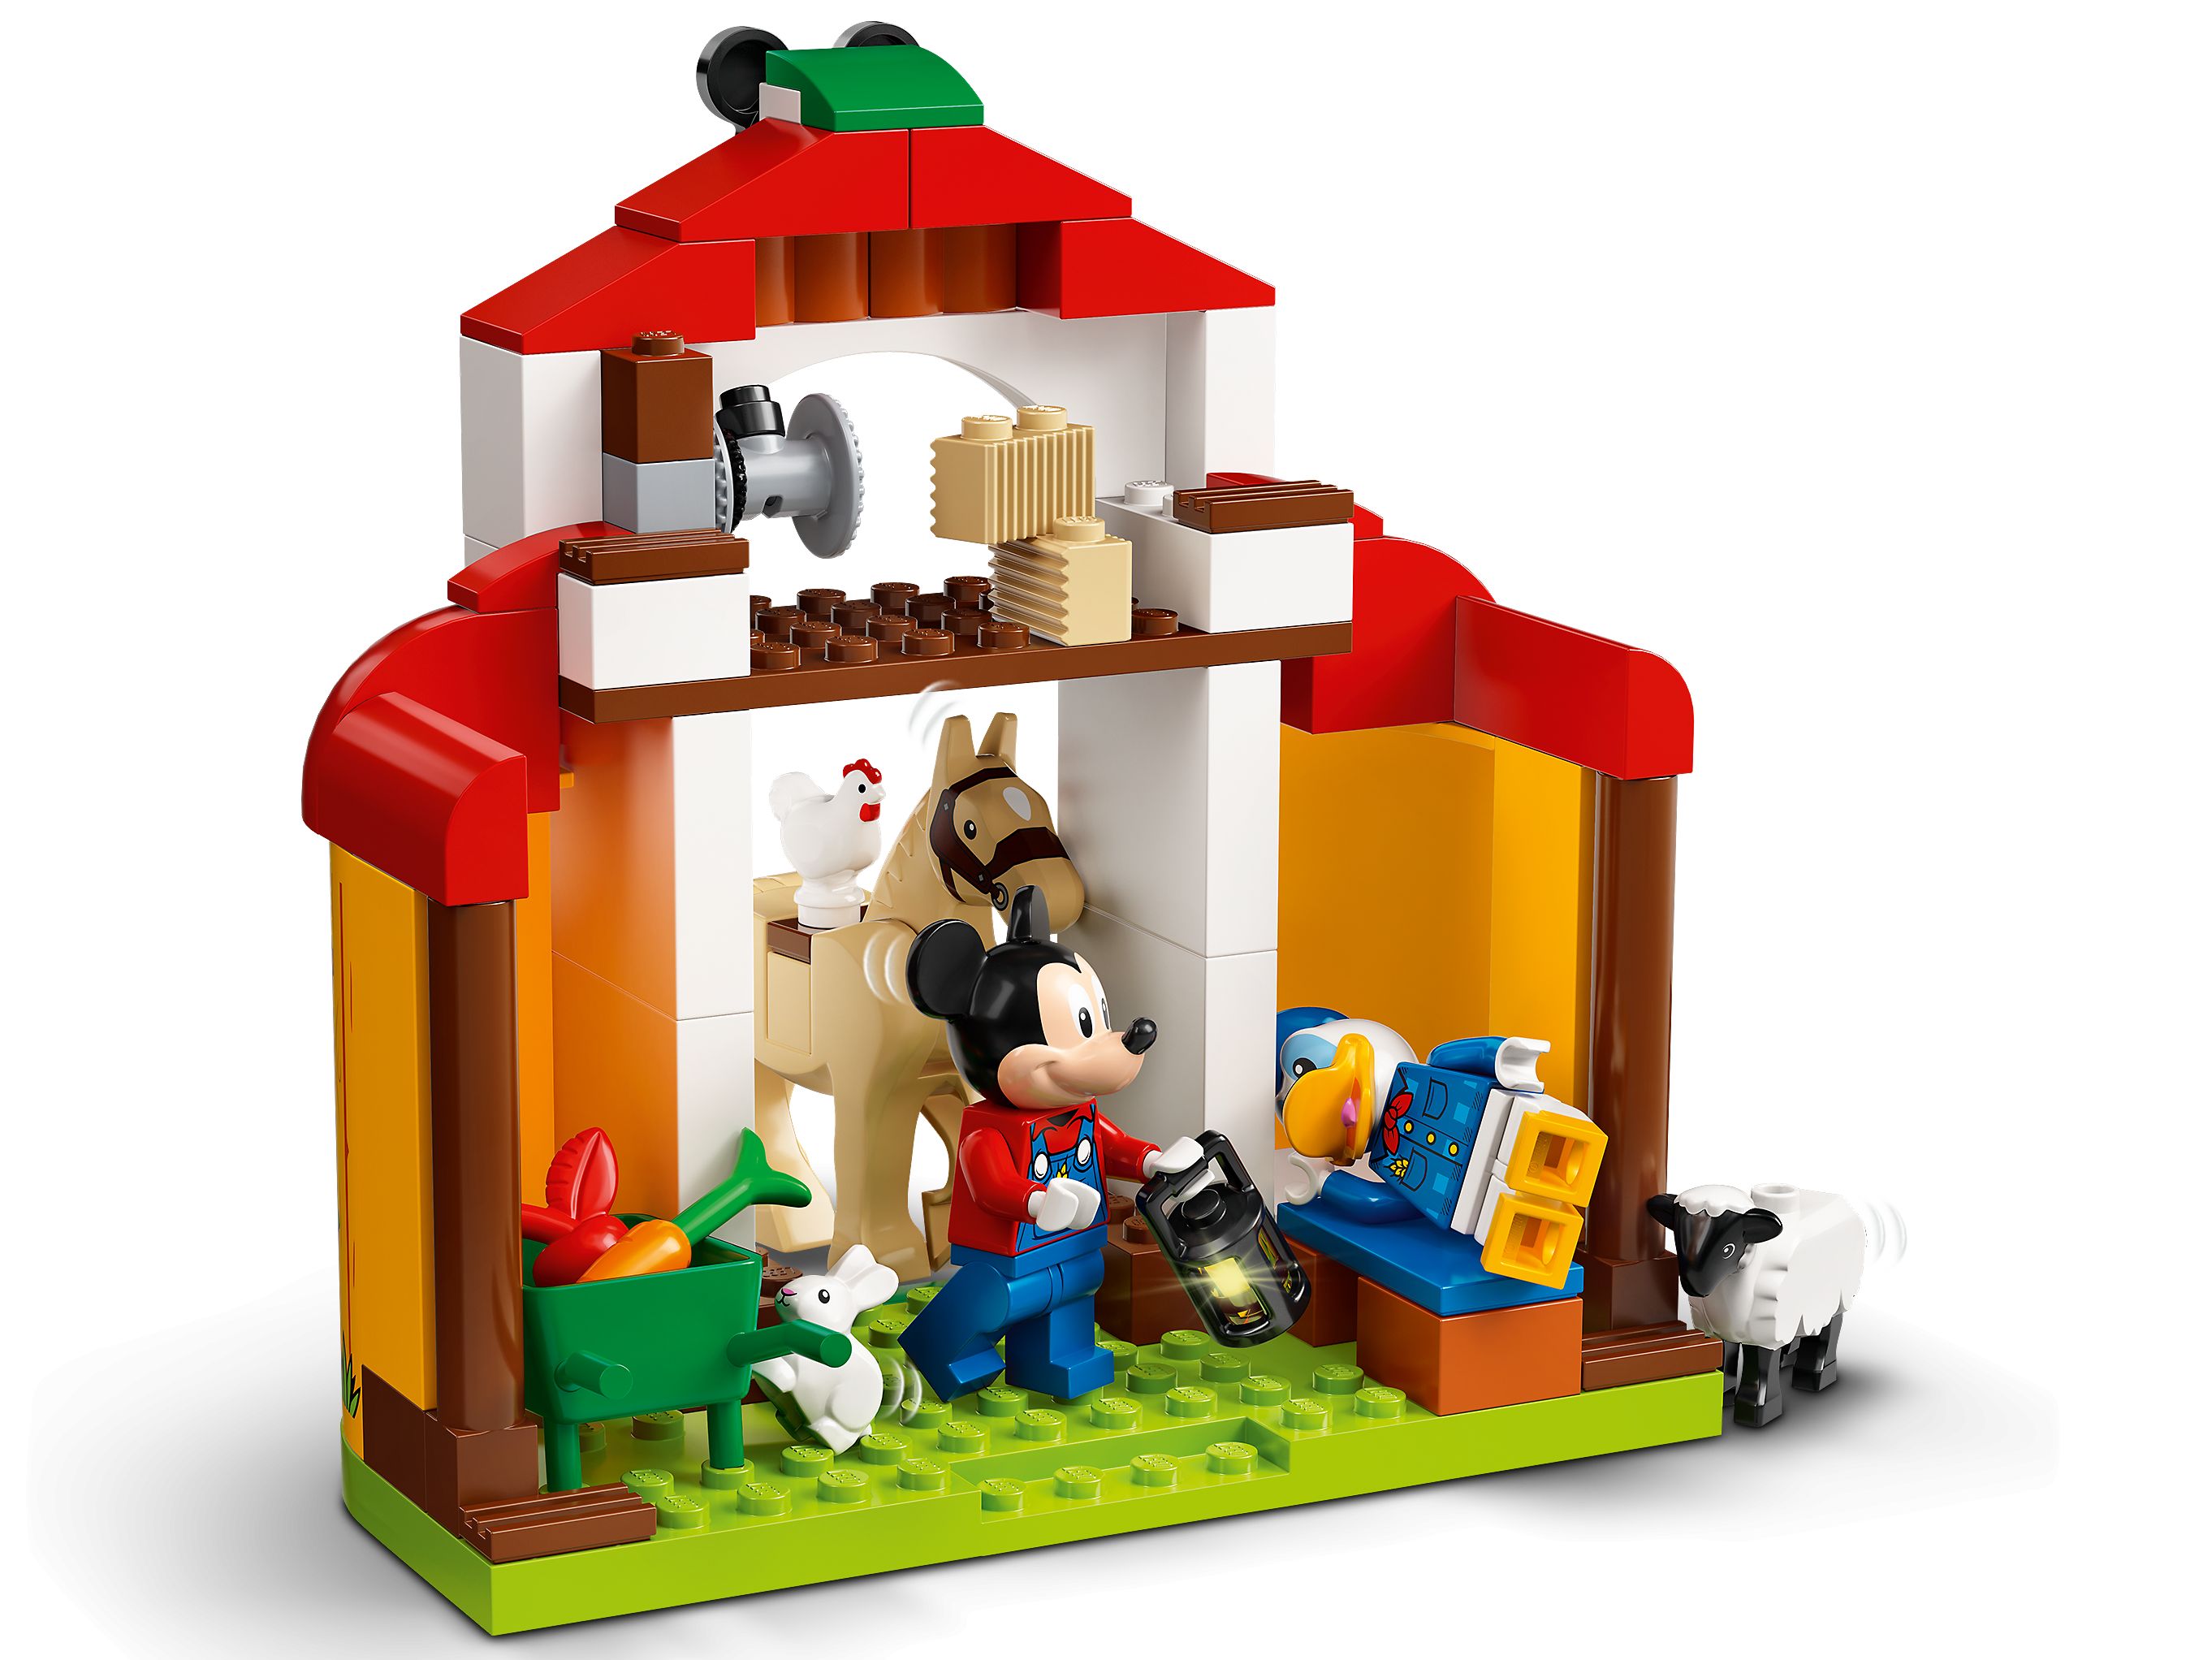 LEGO Disney 10775 Mickys und Donald Duck's Farm LEGO_10775_alt4.jpg